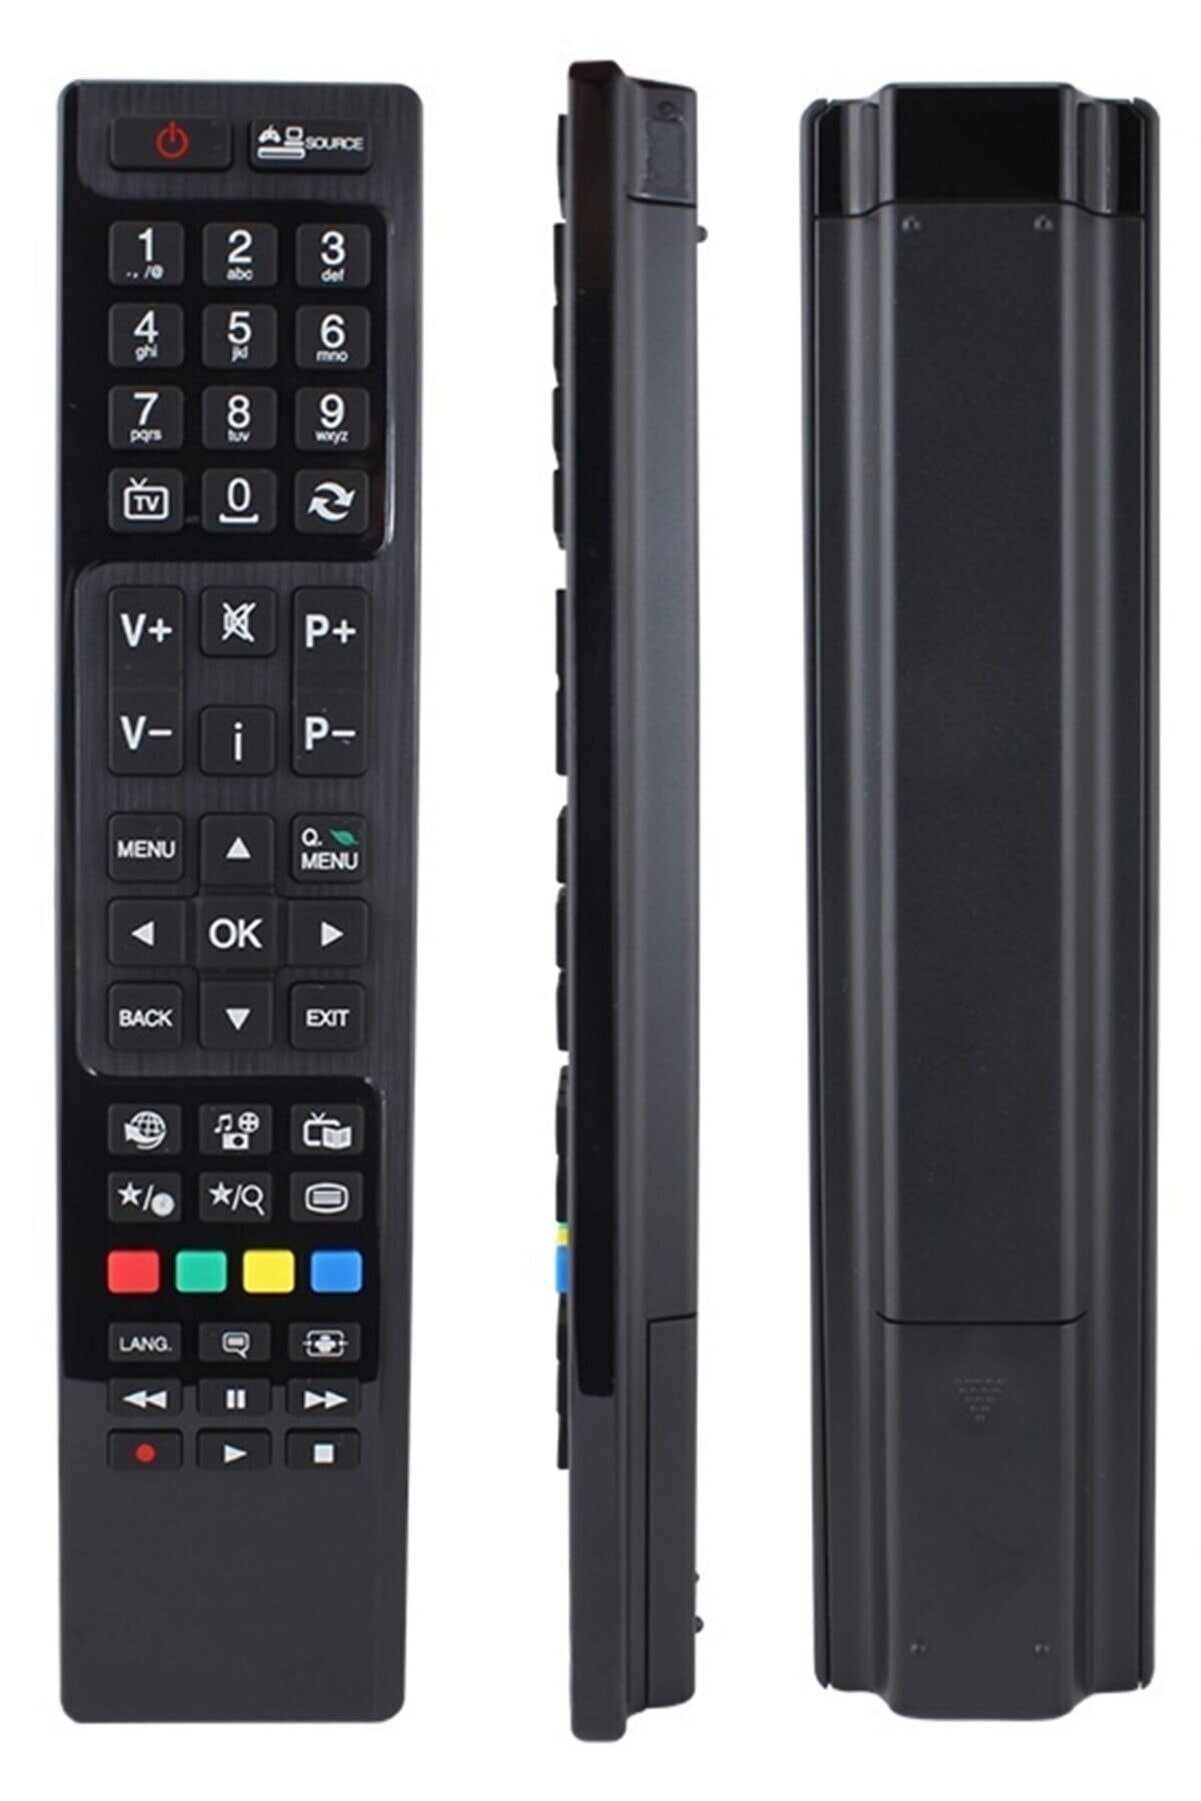 ATAELEKTRONİK Nexon Smart Led Tv Vestel Rc 4846 -30076687 Uydulu Lcd Led Tv Televizyon Akıllı Kumandası Finlux 313